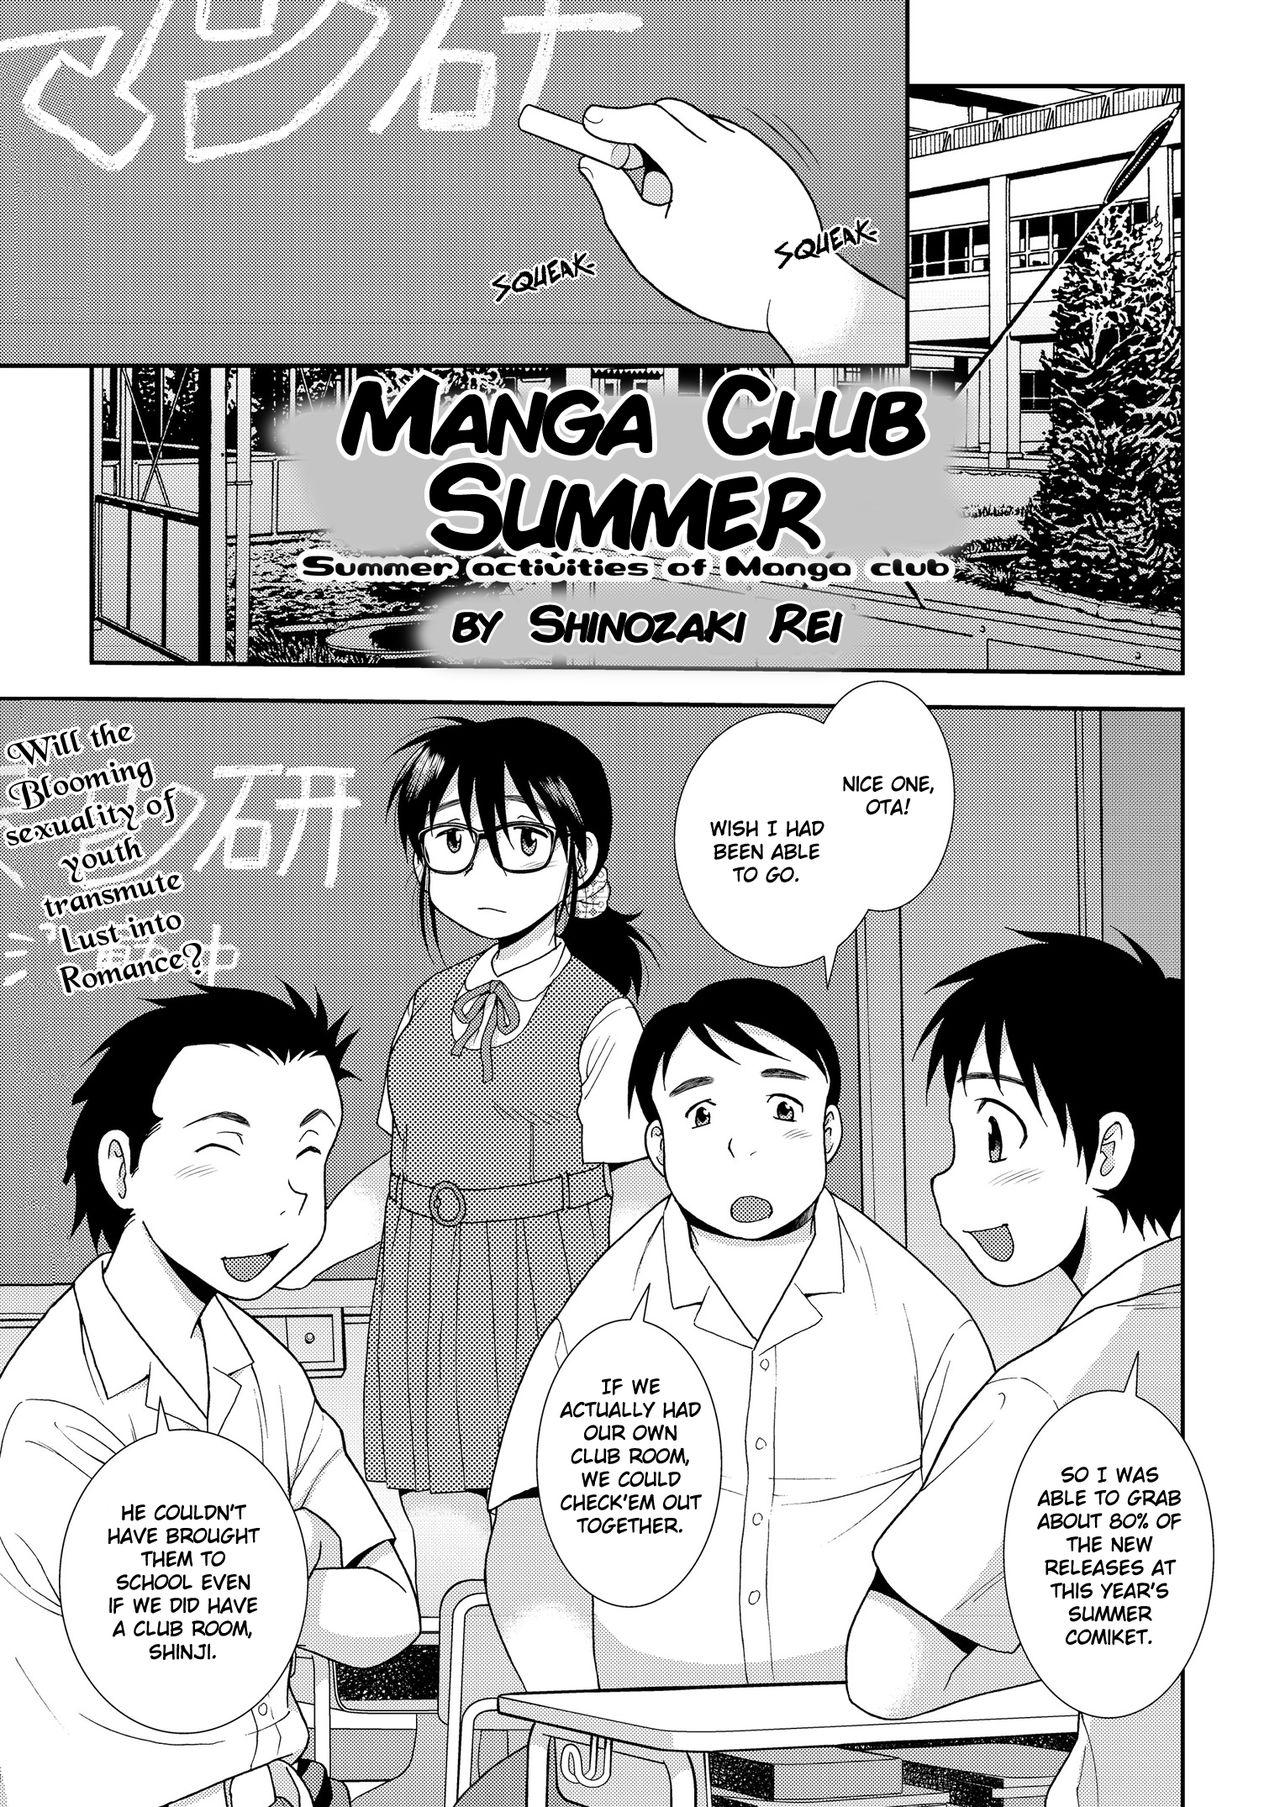 Bathroom Mangaken no Natsu | Manga Club Summer Masturbates - Picture 1